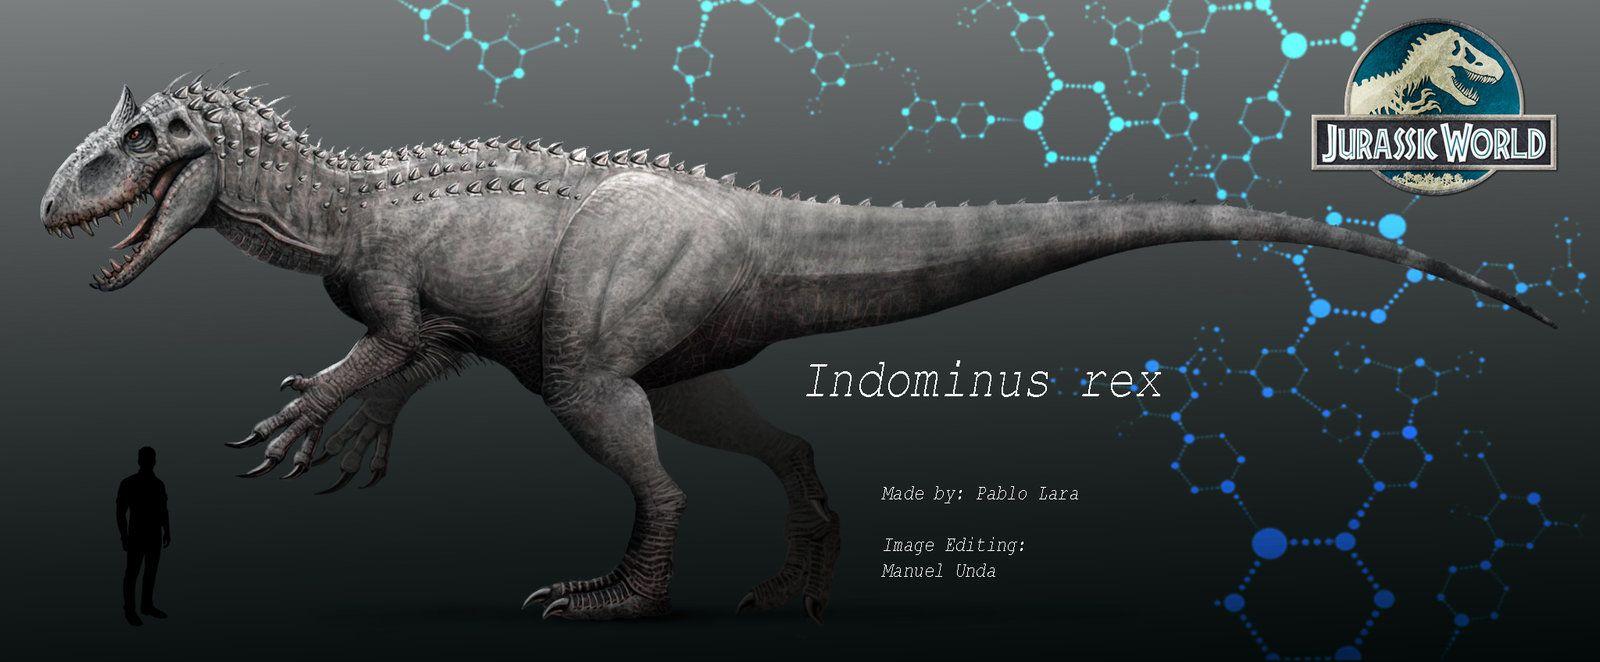 Indominus rex  Jurassic world indominus rex, Jurassic world wallpaper,  Jurassic world dinosaurs